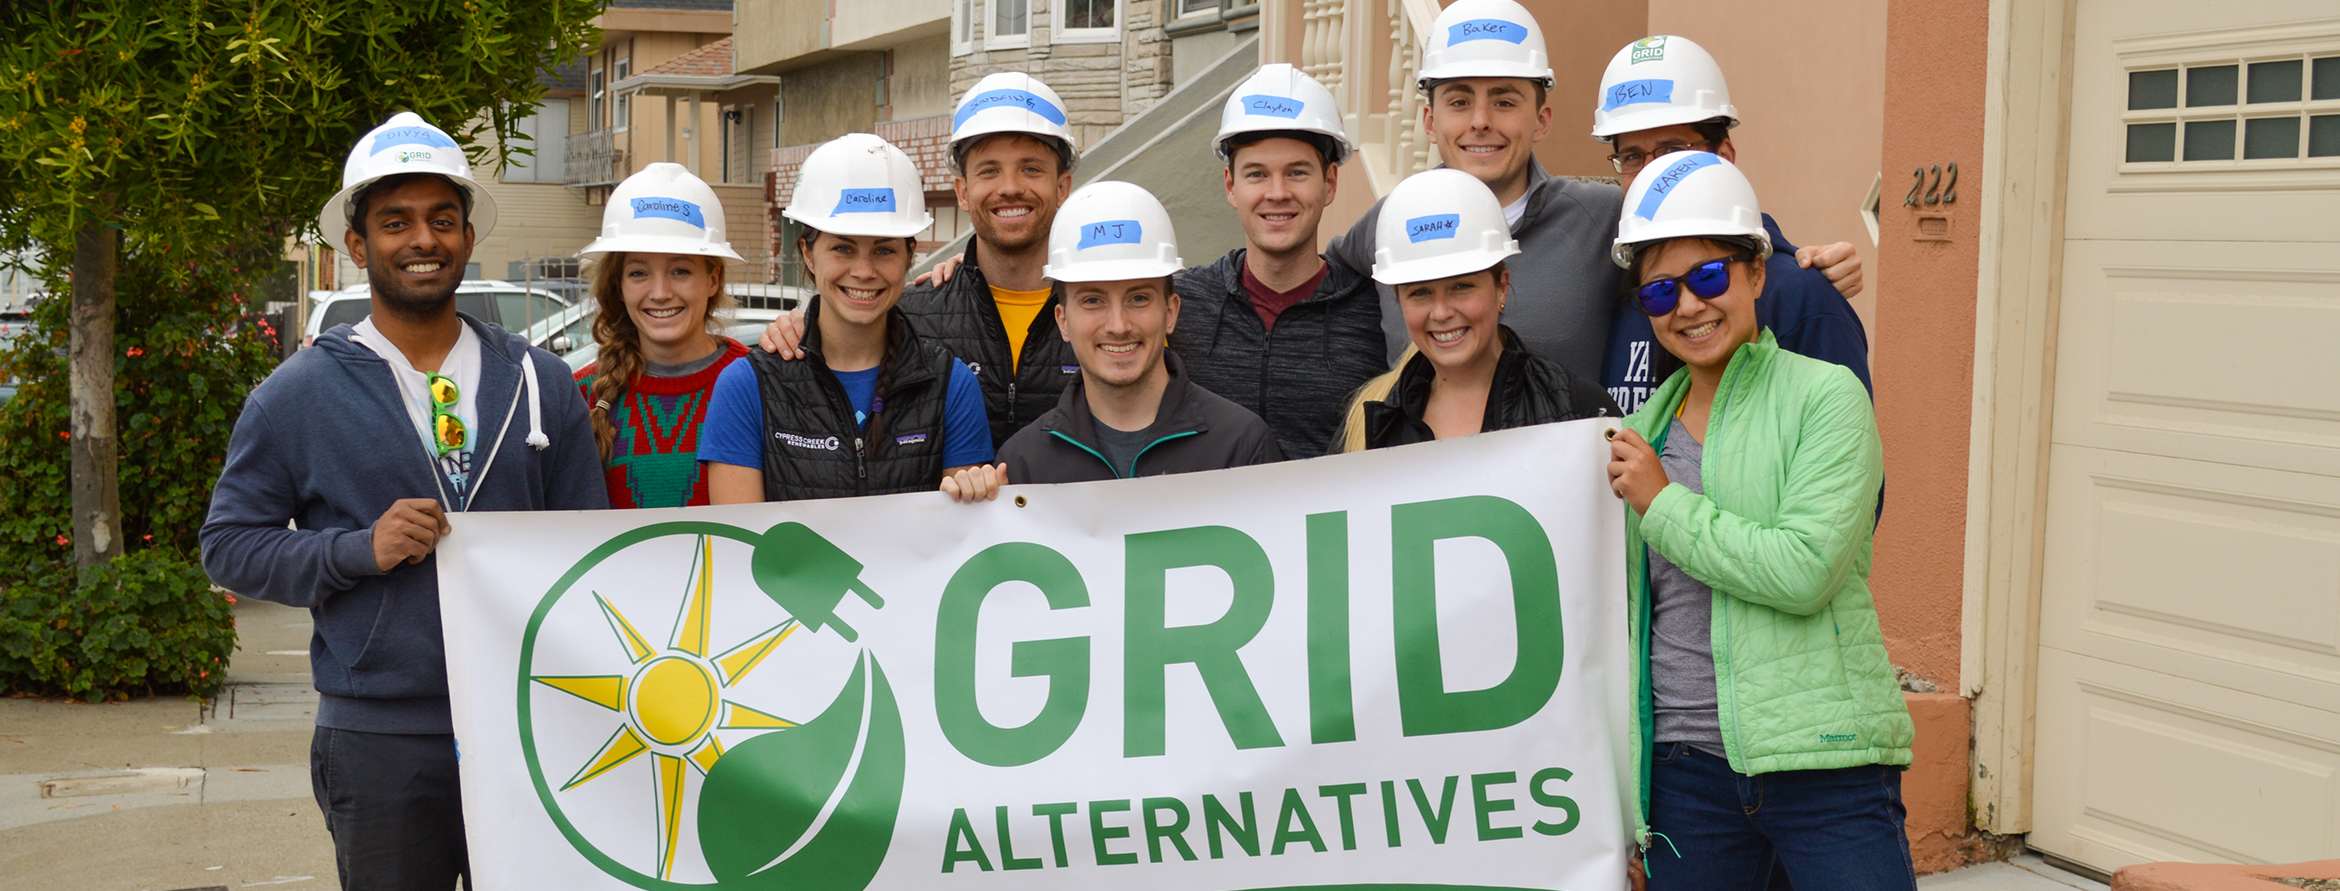 Grid-Alternatives-group-H